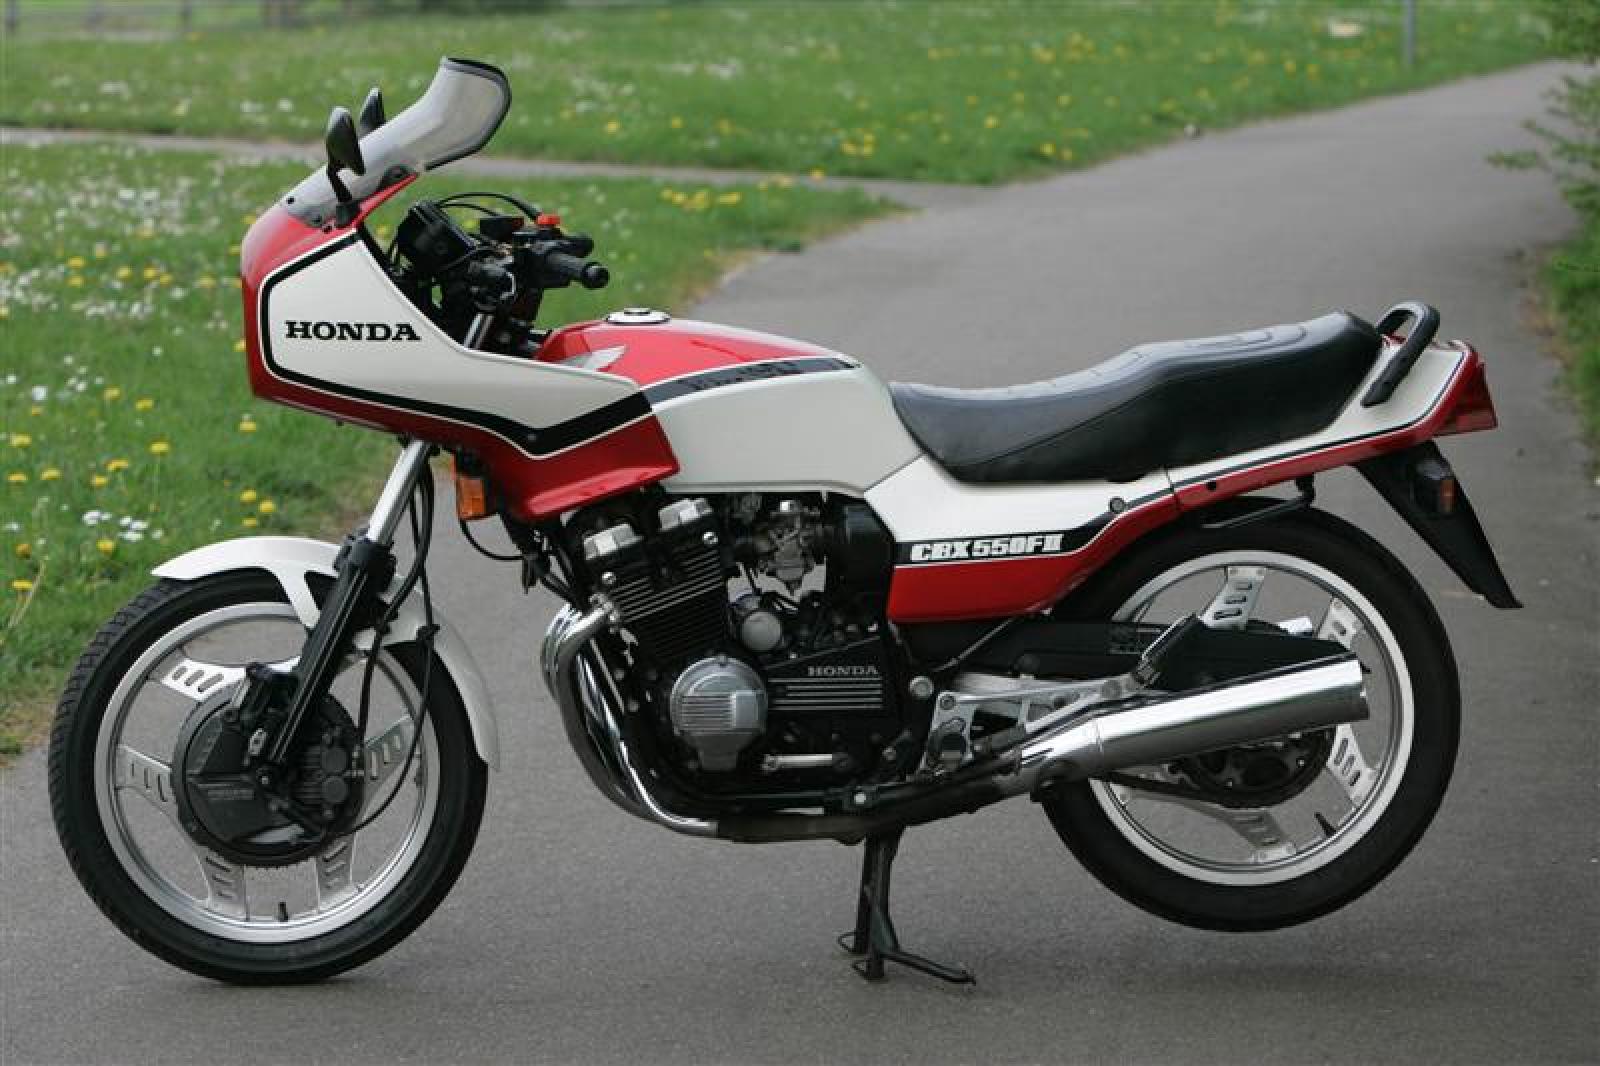 Honda CBX 550 F 2 1984 photo - 5